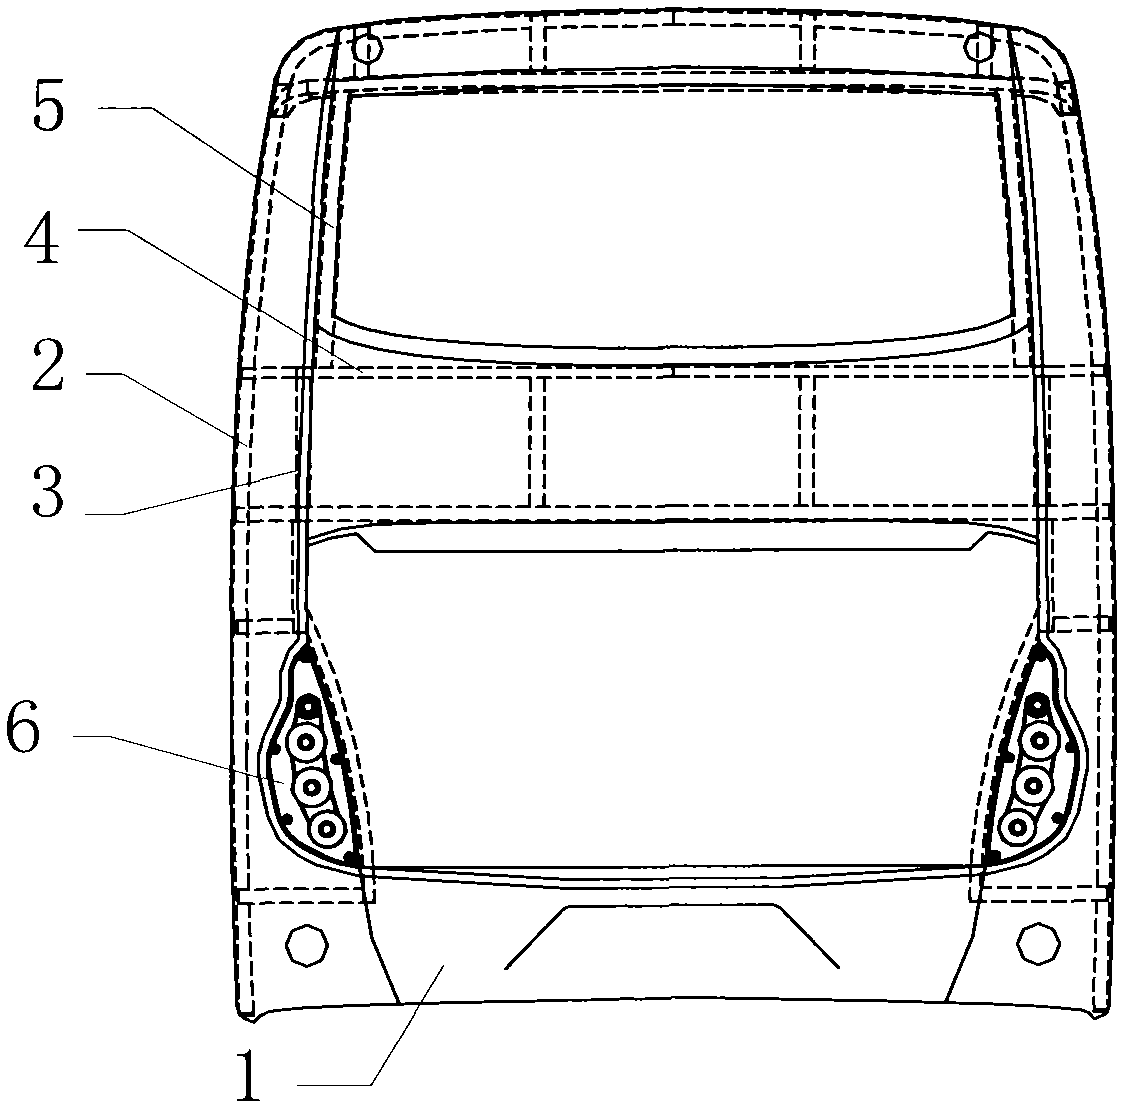 Streamline passenger vehicle tail plate